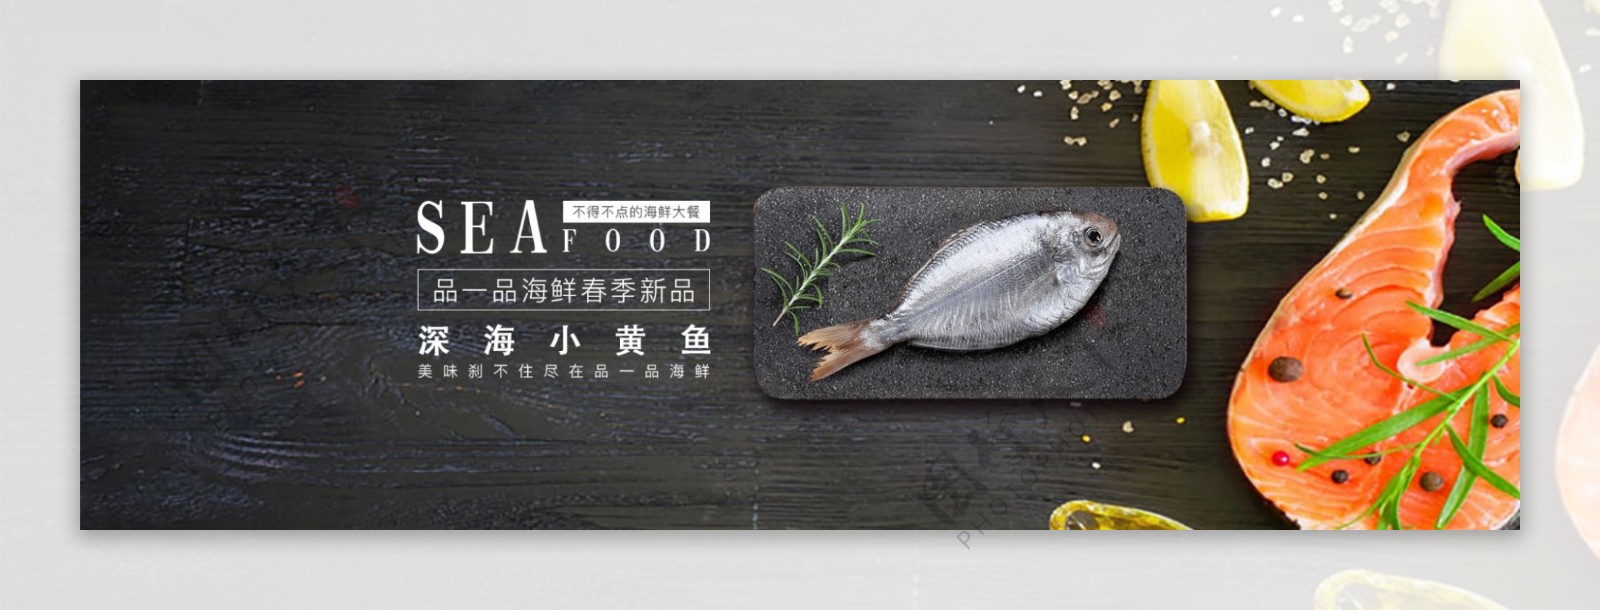 海鲜食物海报banner